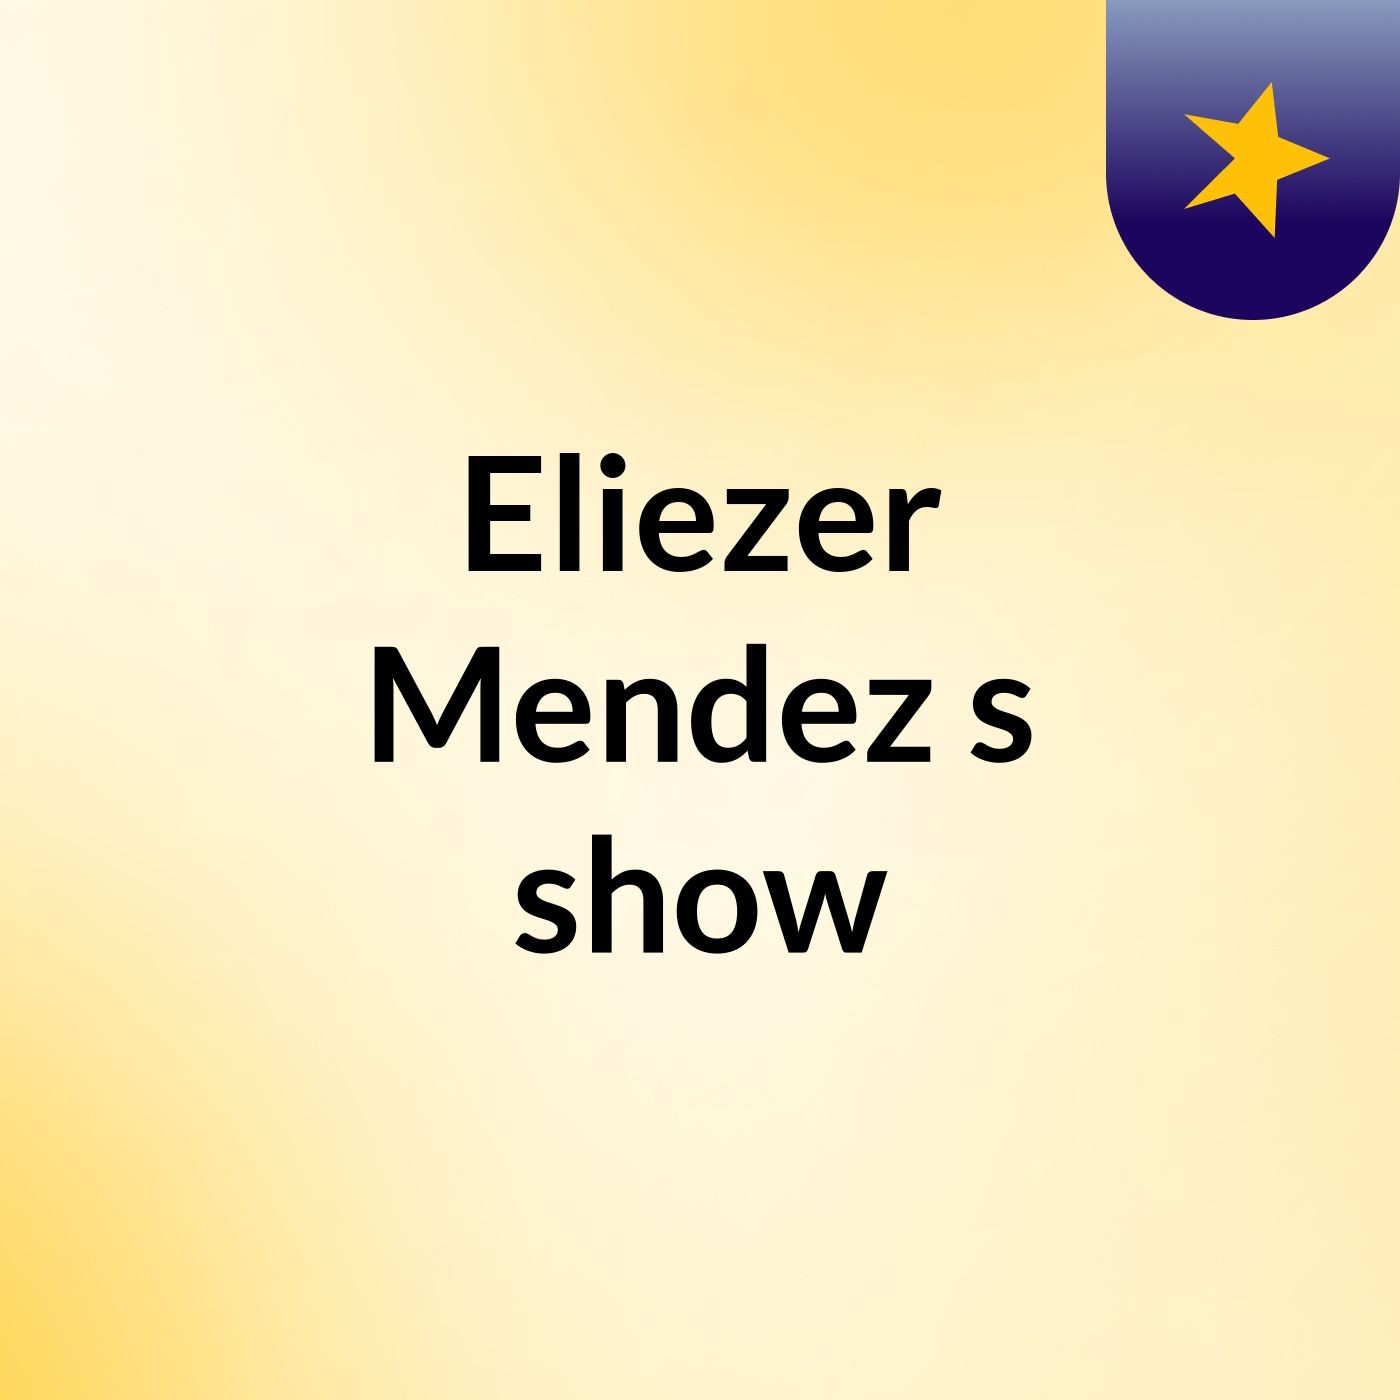 Eliezer Mendez's show